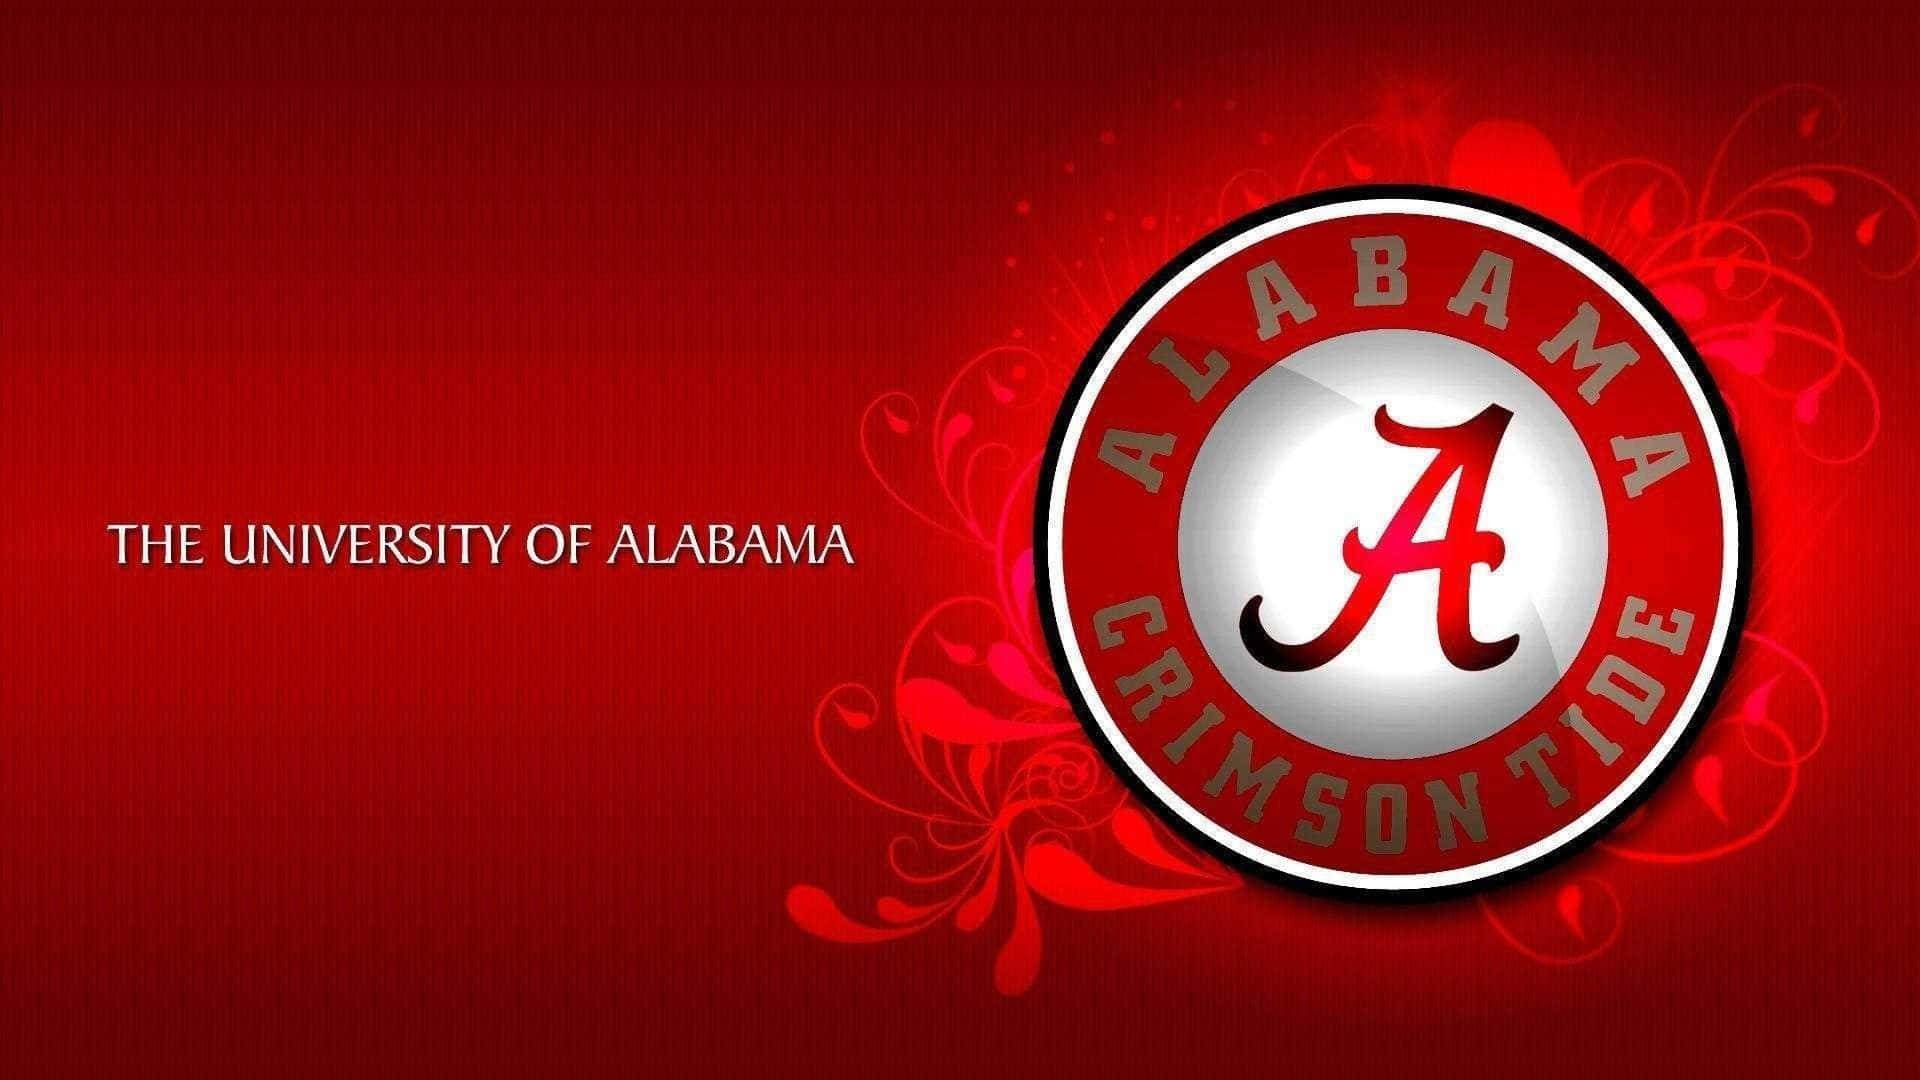 Show your passion for Alabama Crimson Tide